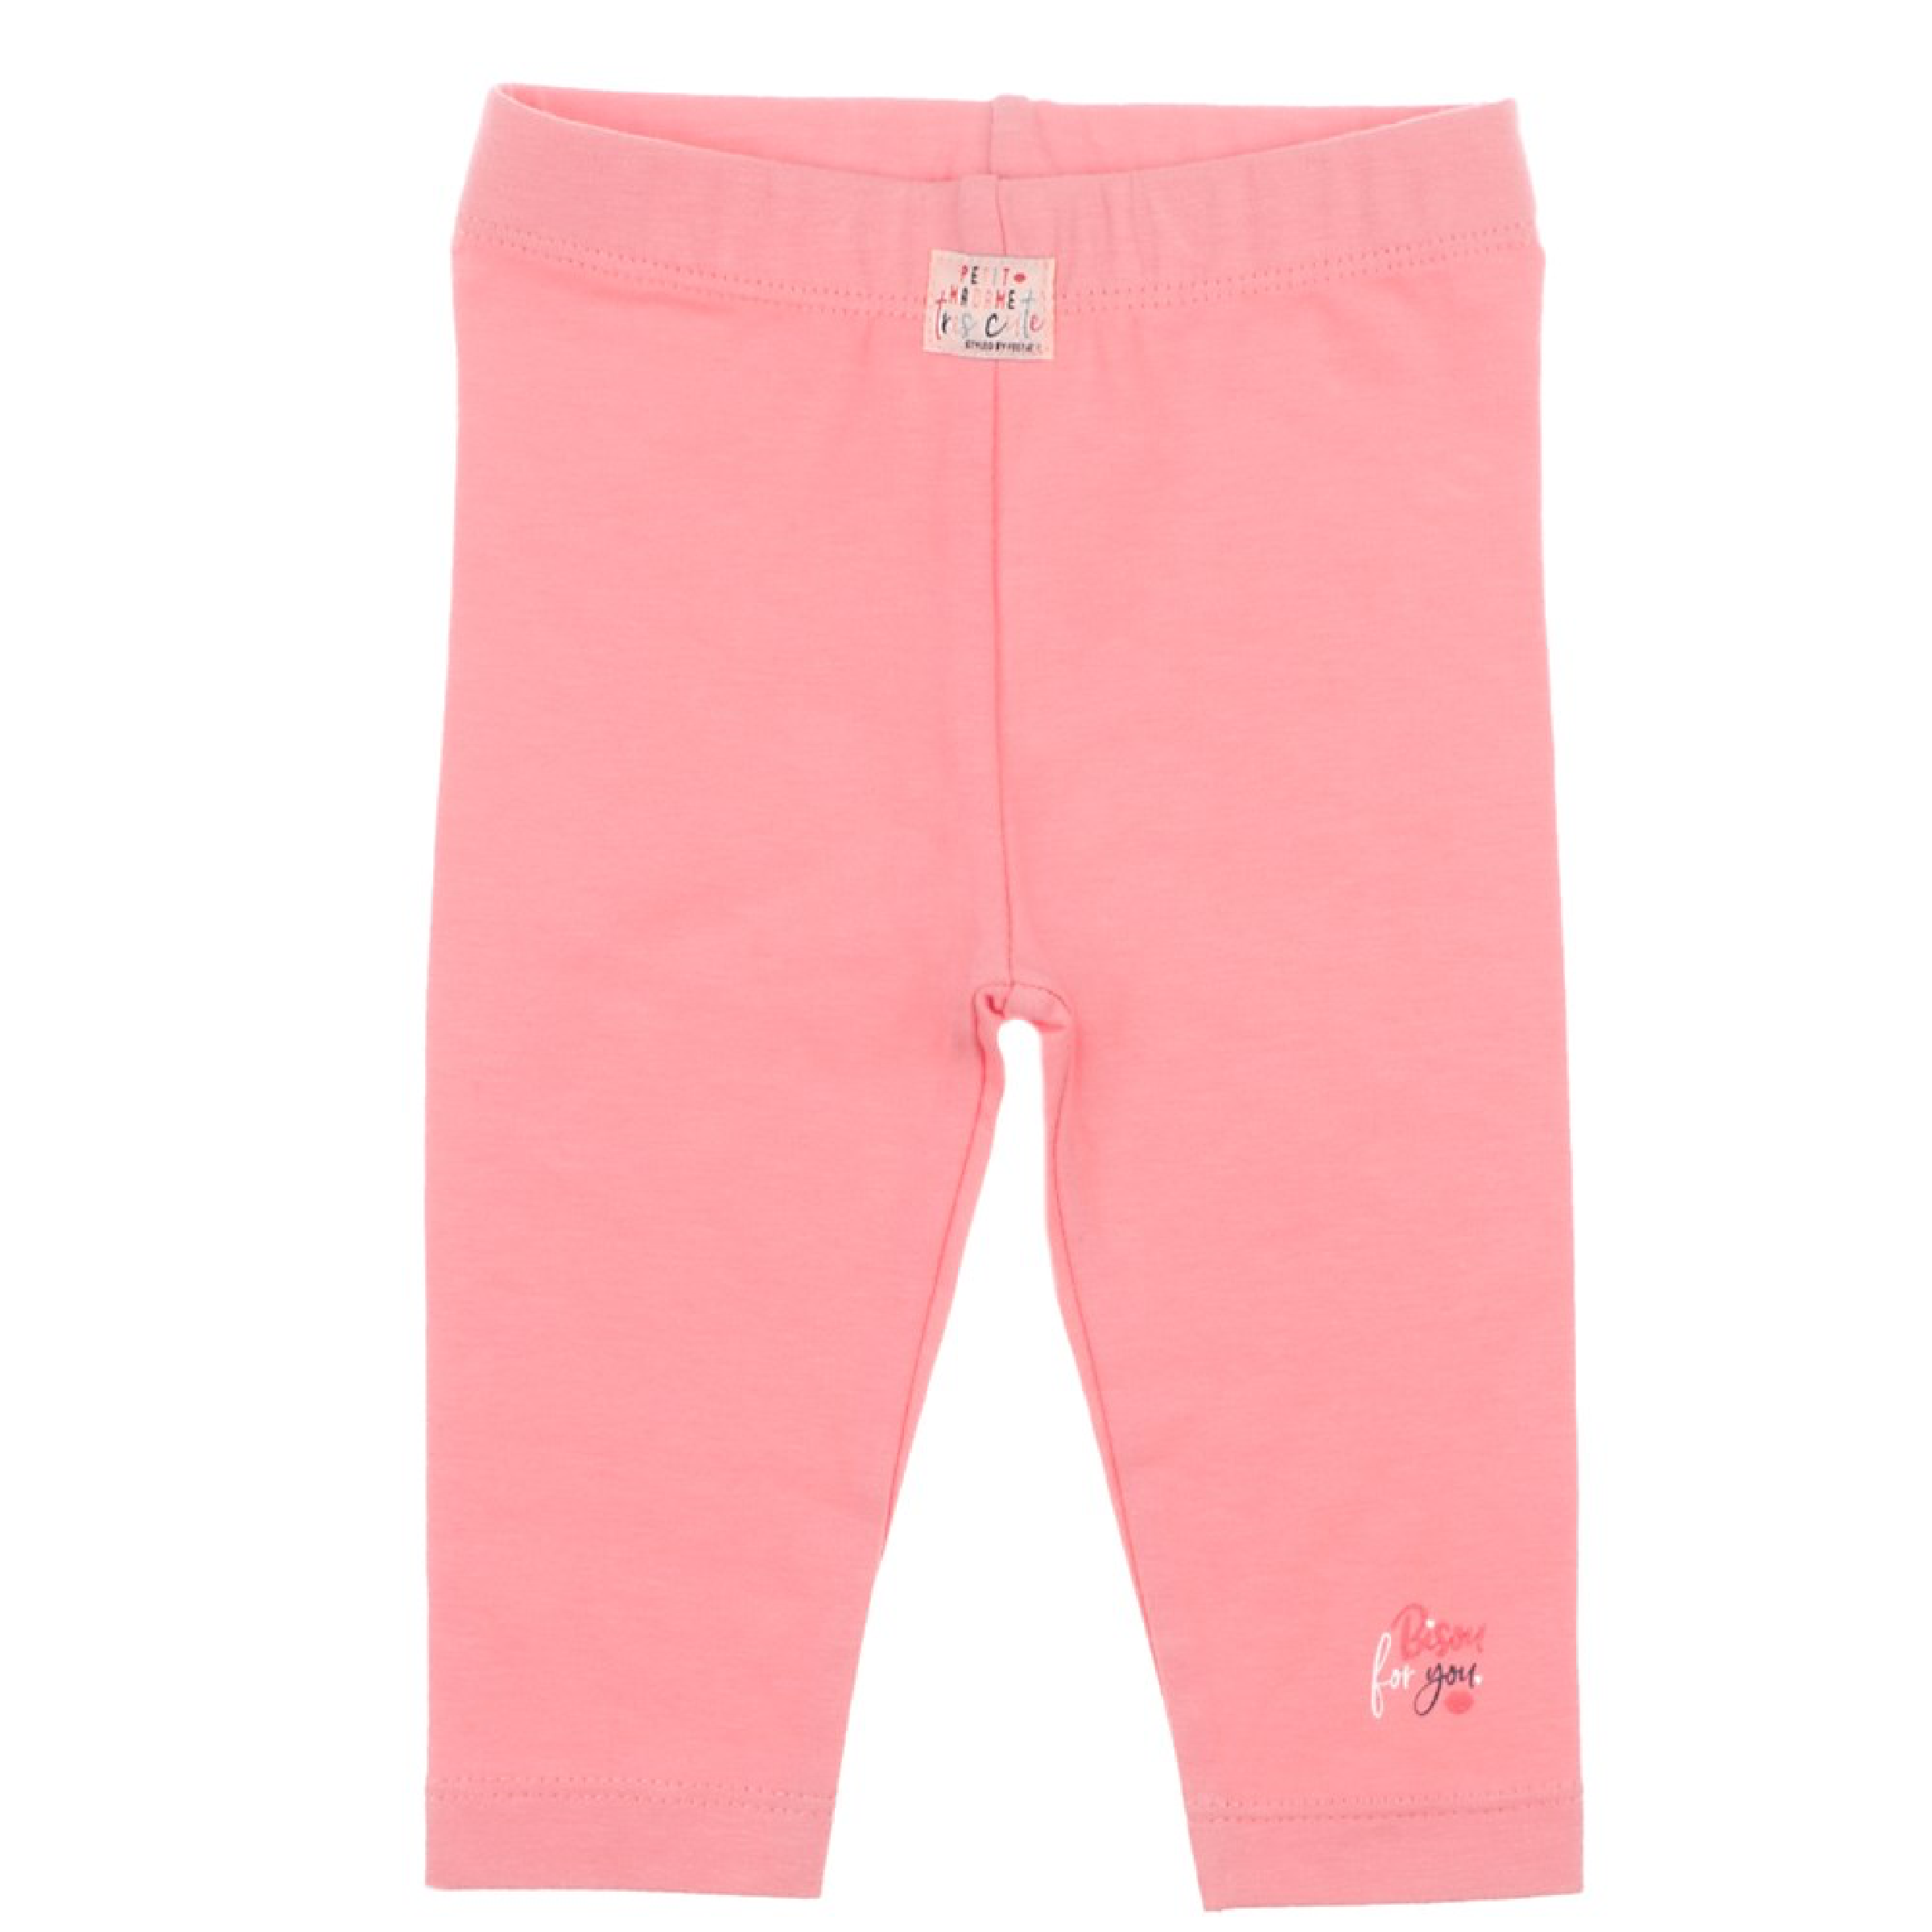 Meisjes Legging - Mon Petit van Feetje in de kleur Roze in maat 86.